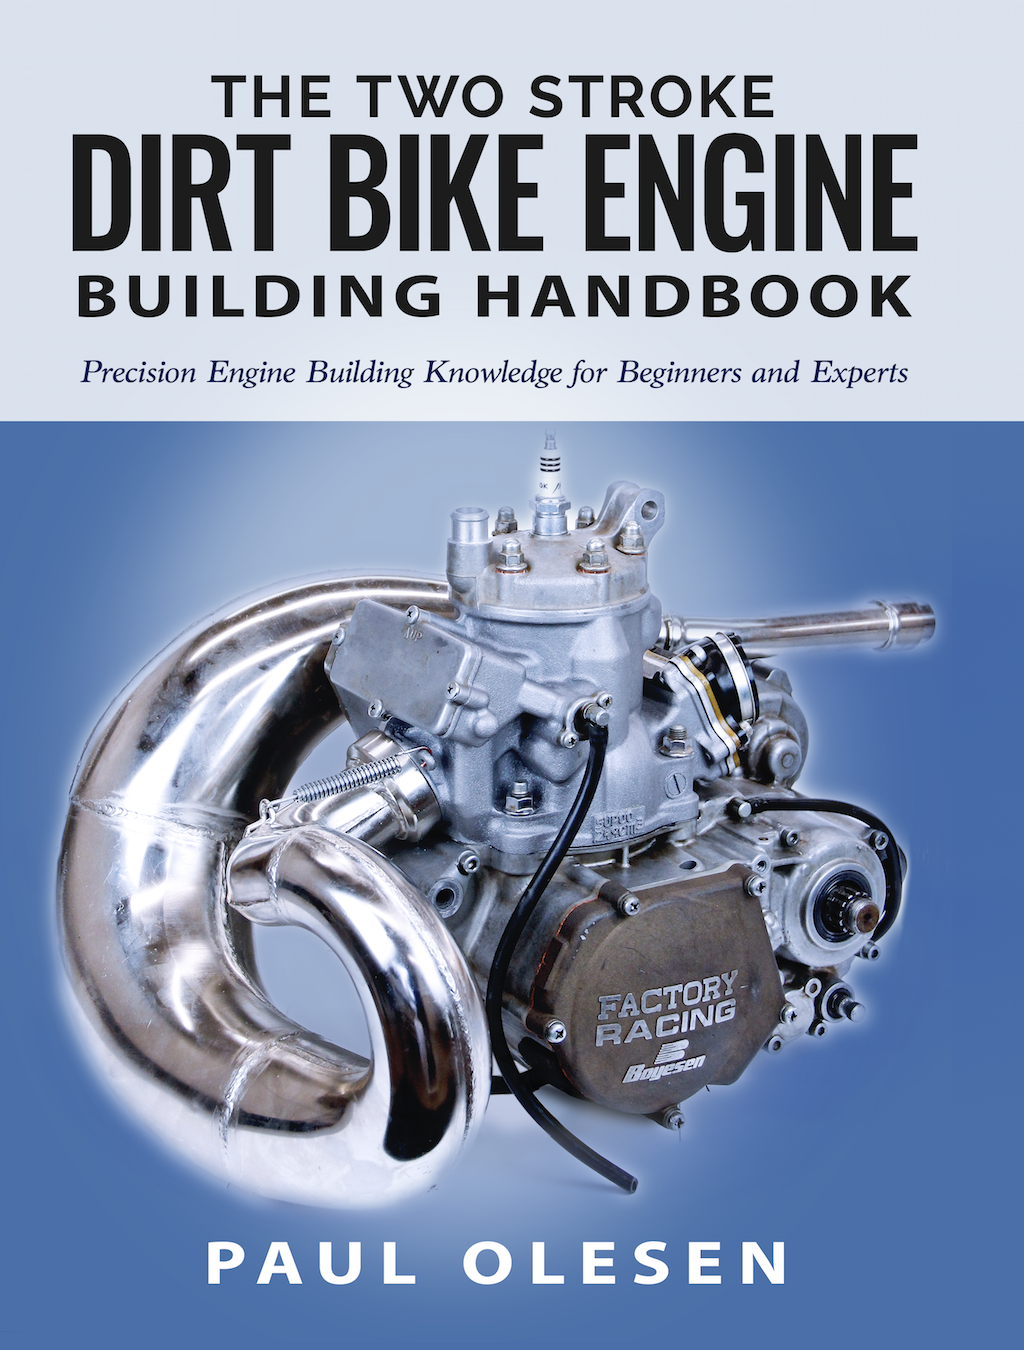 Print book version of The Two Stroke Dirt Bike Engine Building Handbook